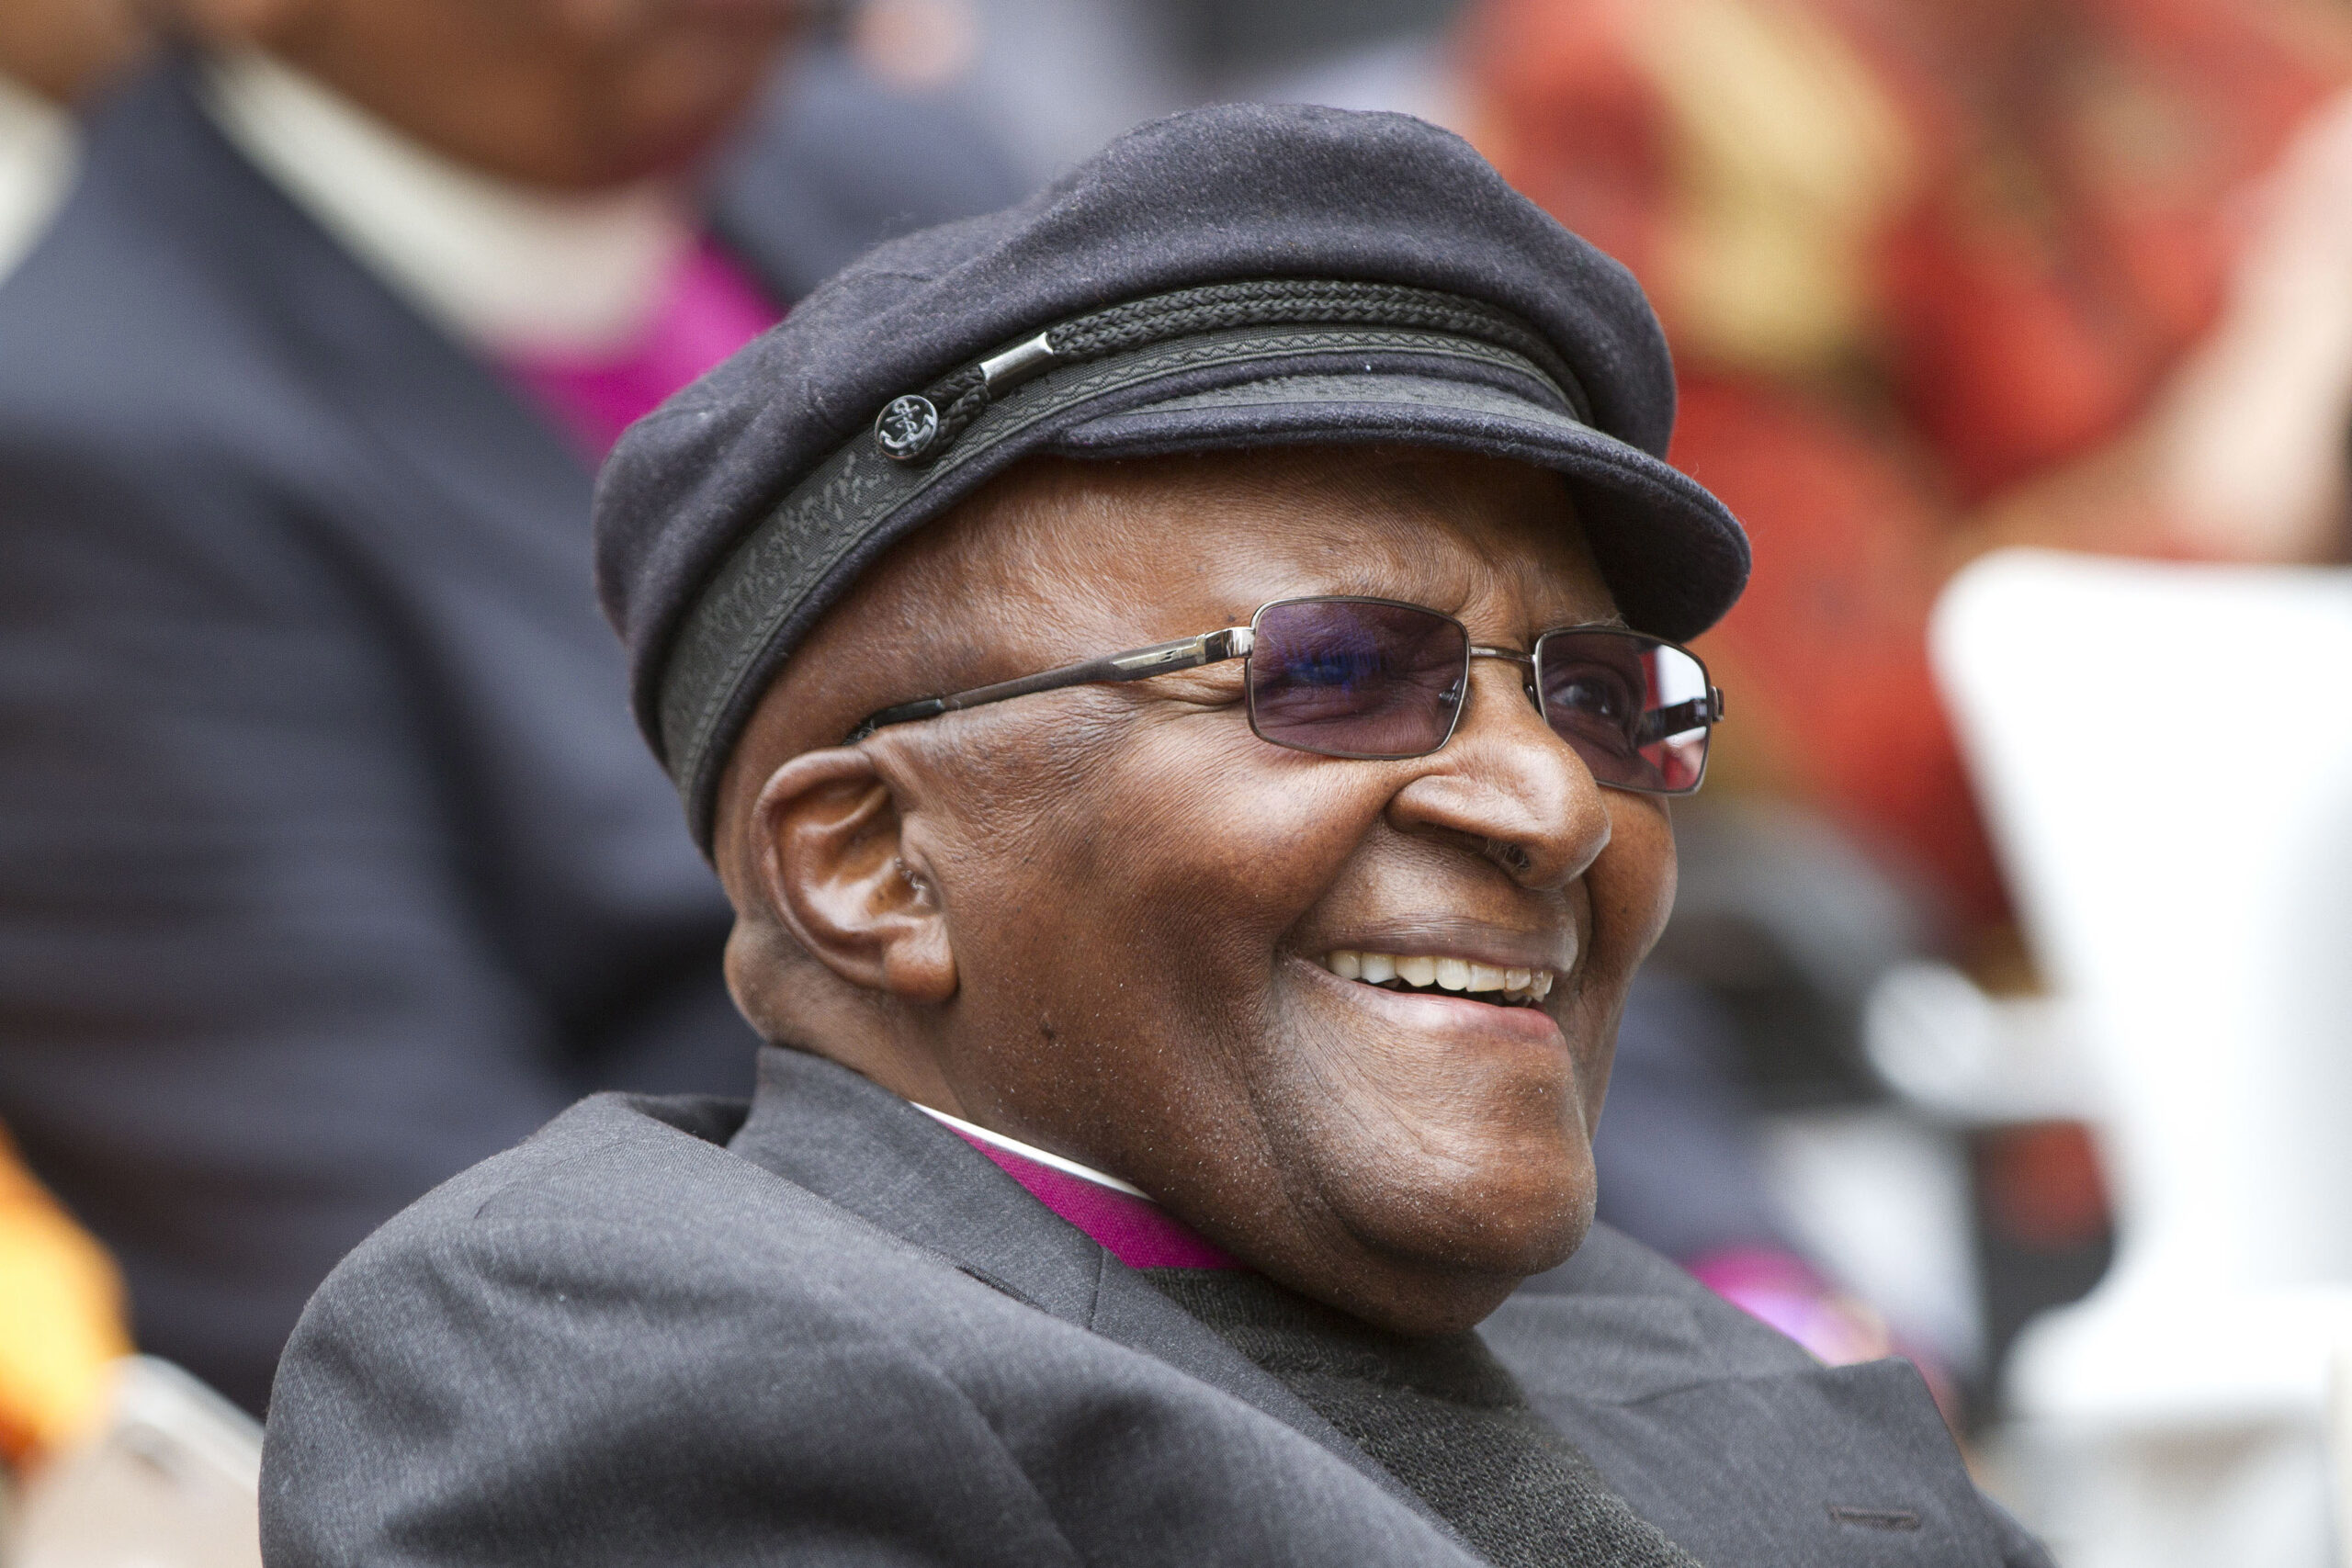 A photo of Desmond Tutu